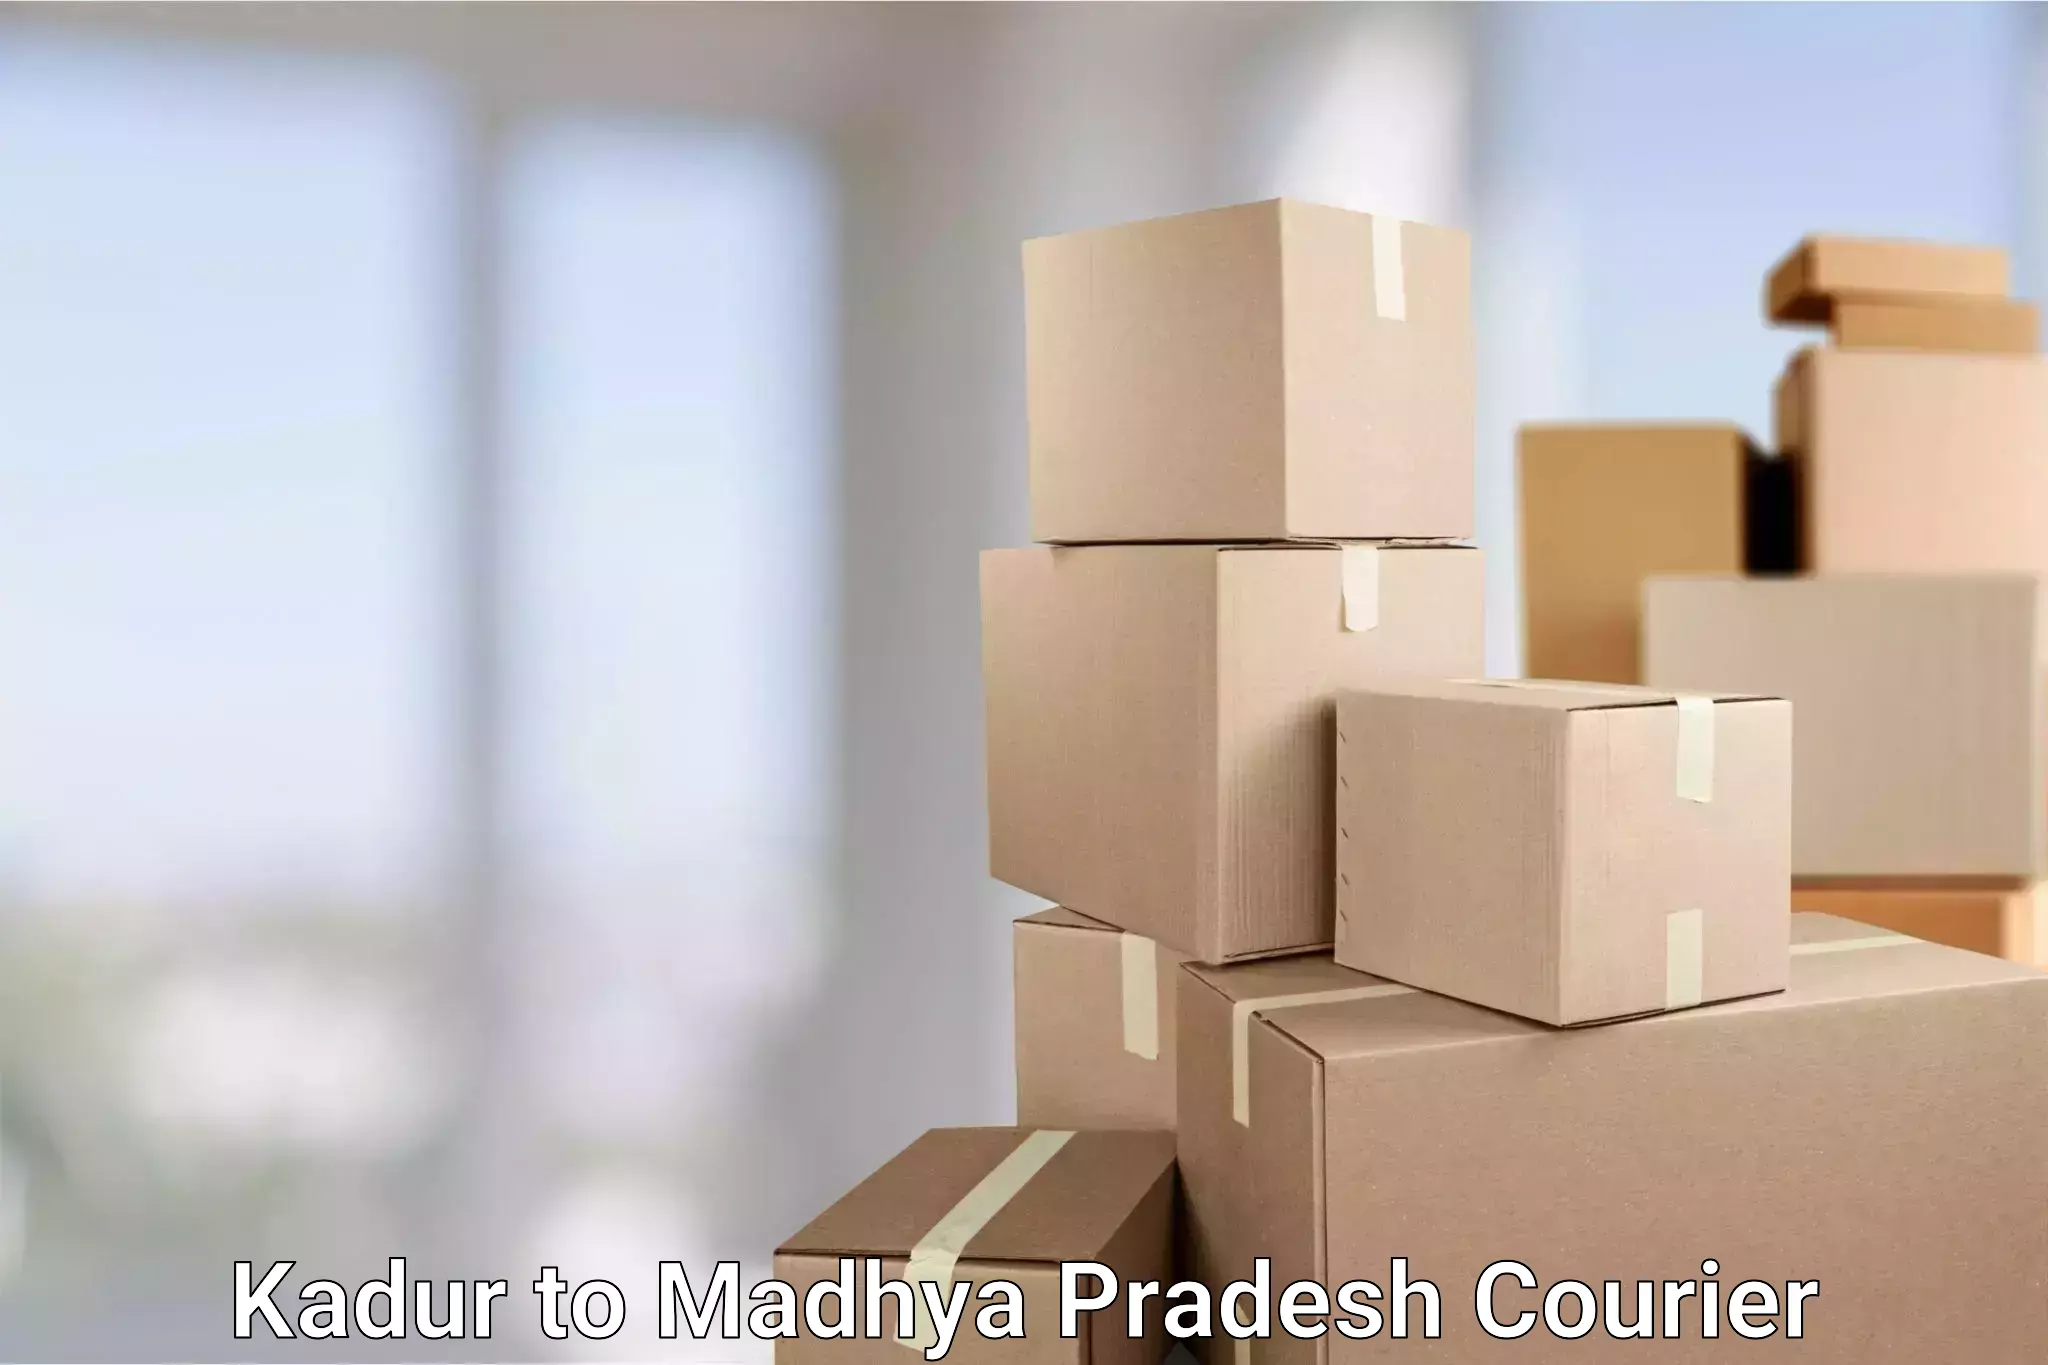 Lightweight parcel options Kadur to Tikamgarh